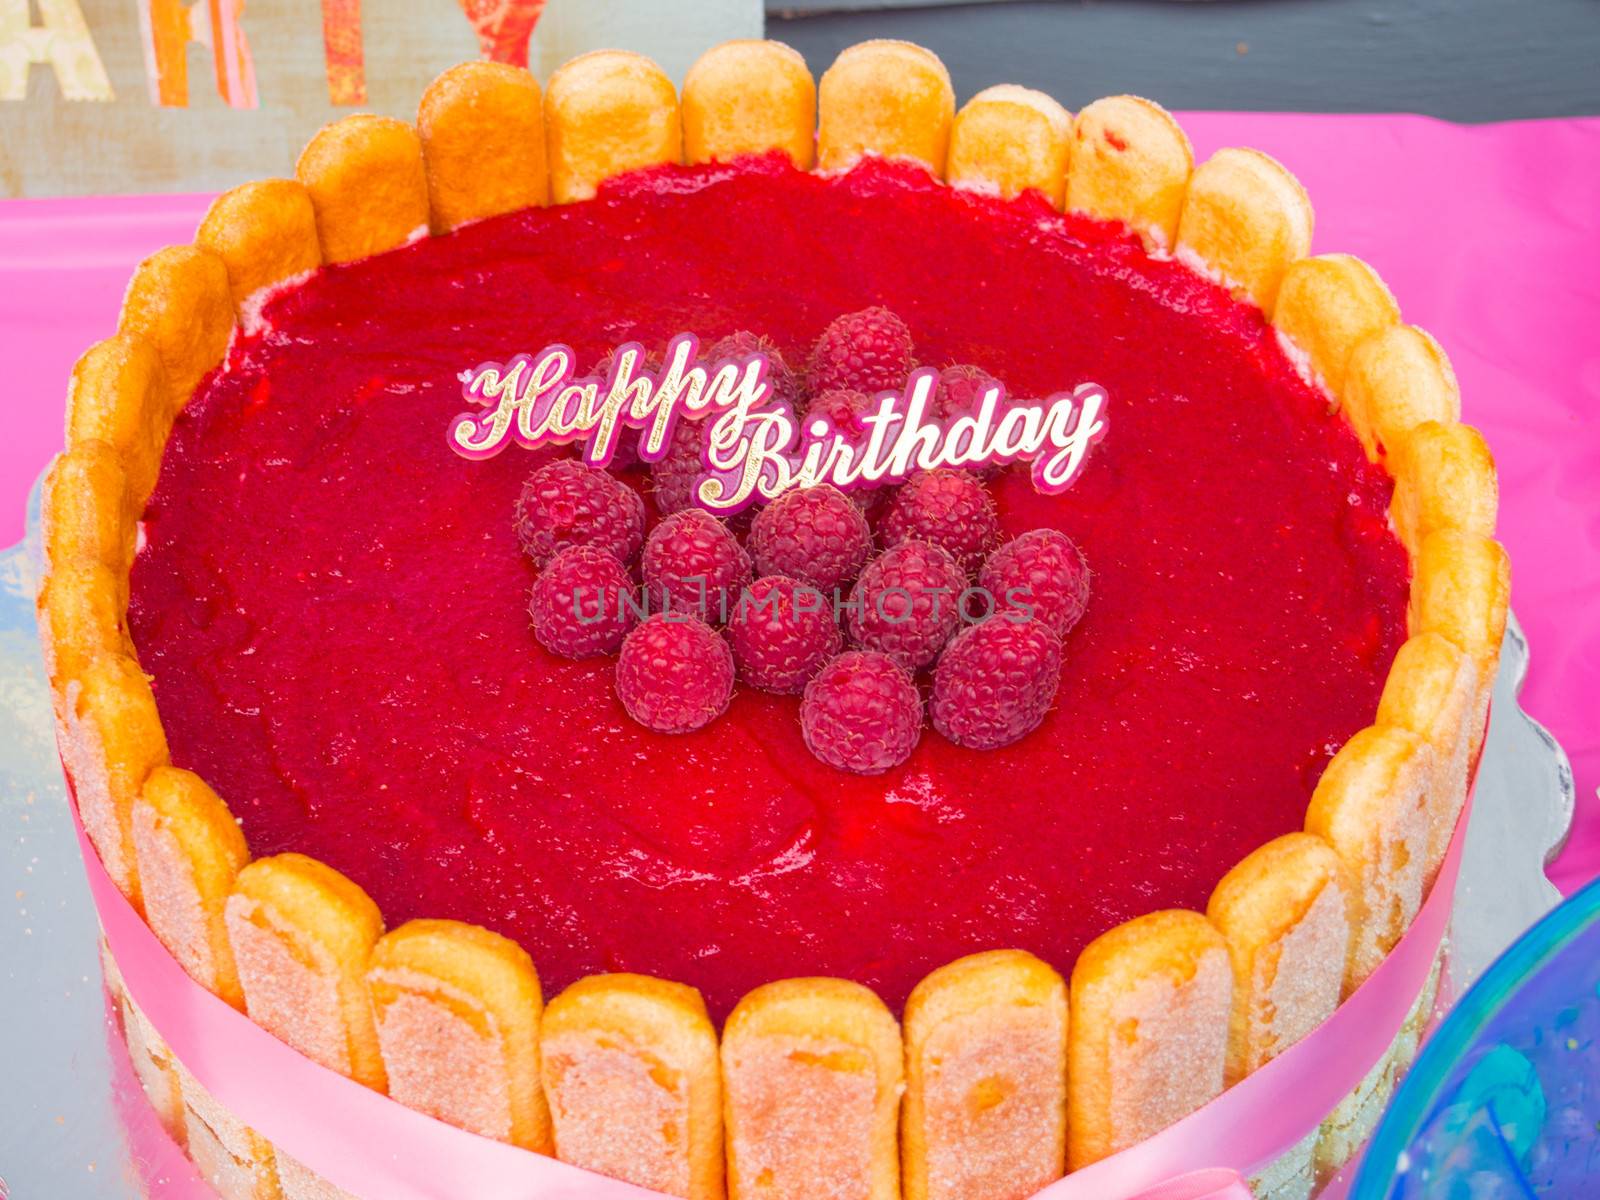 Raspberry Birthday Cake by melastmohican